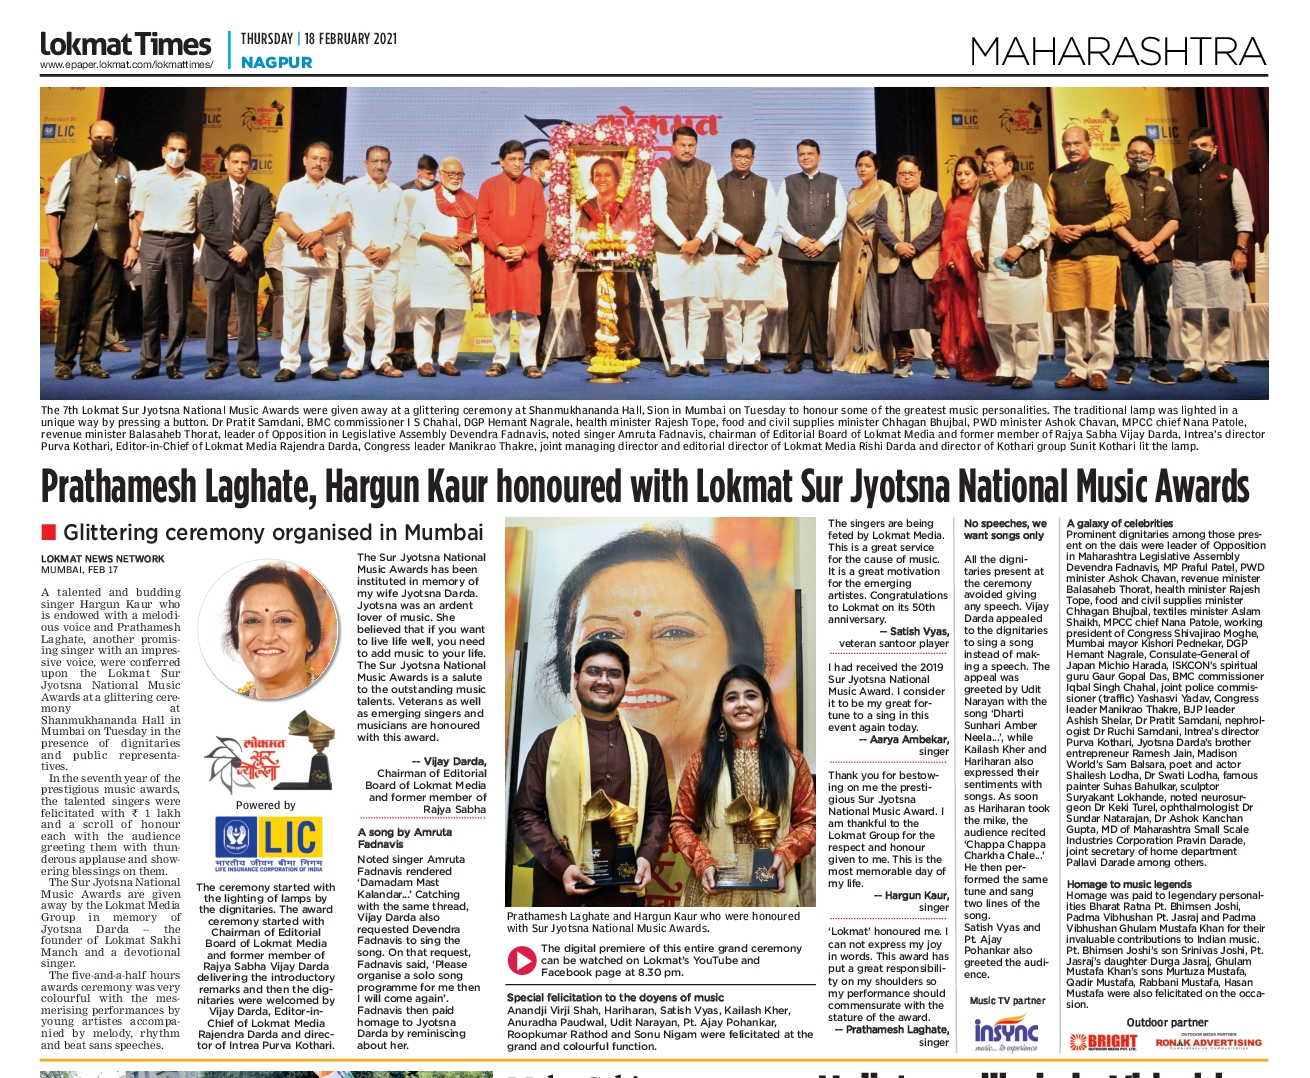 Prathamesh Laghate, Hargun Kaur honoured with Lokmat Sur Jyotsna National Music Awards